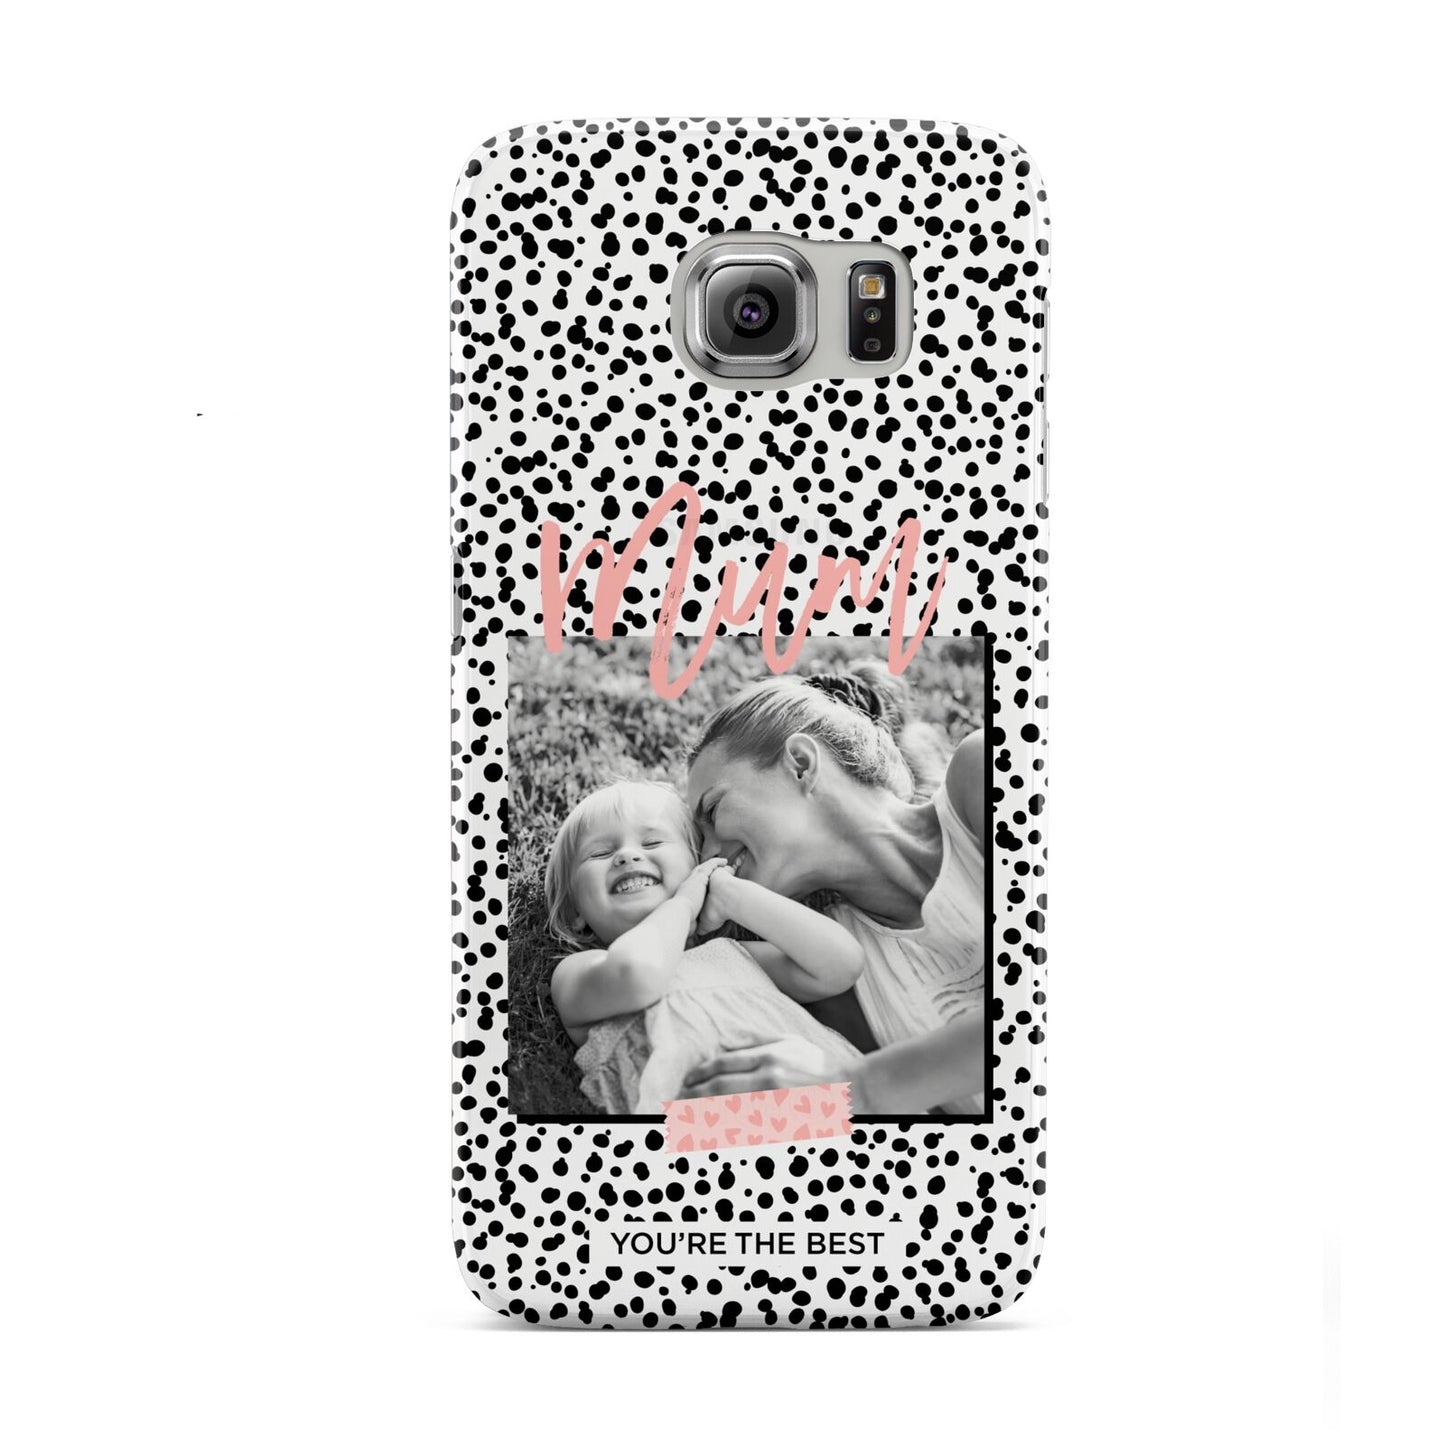 Polka Dot Mum Samsung Galaxy S6 Case